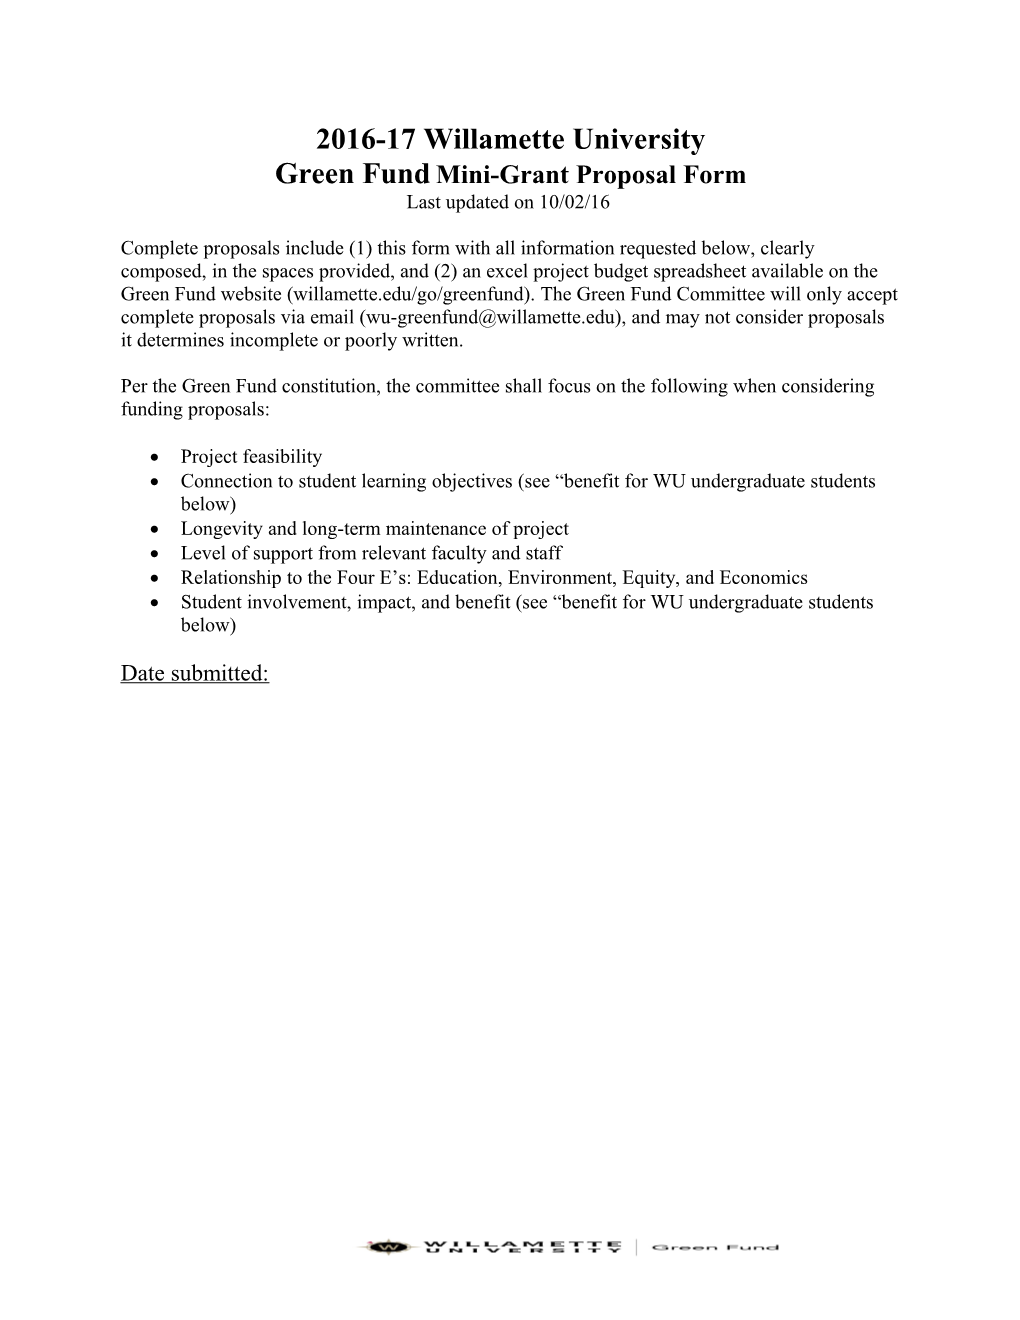 Green Fundmini-Grant Proposal Form